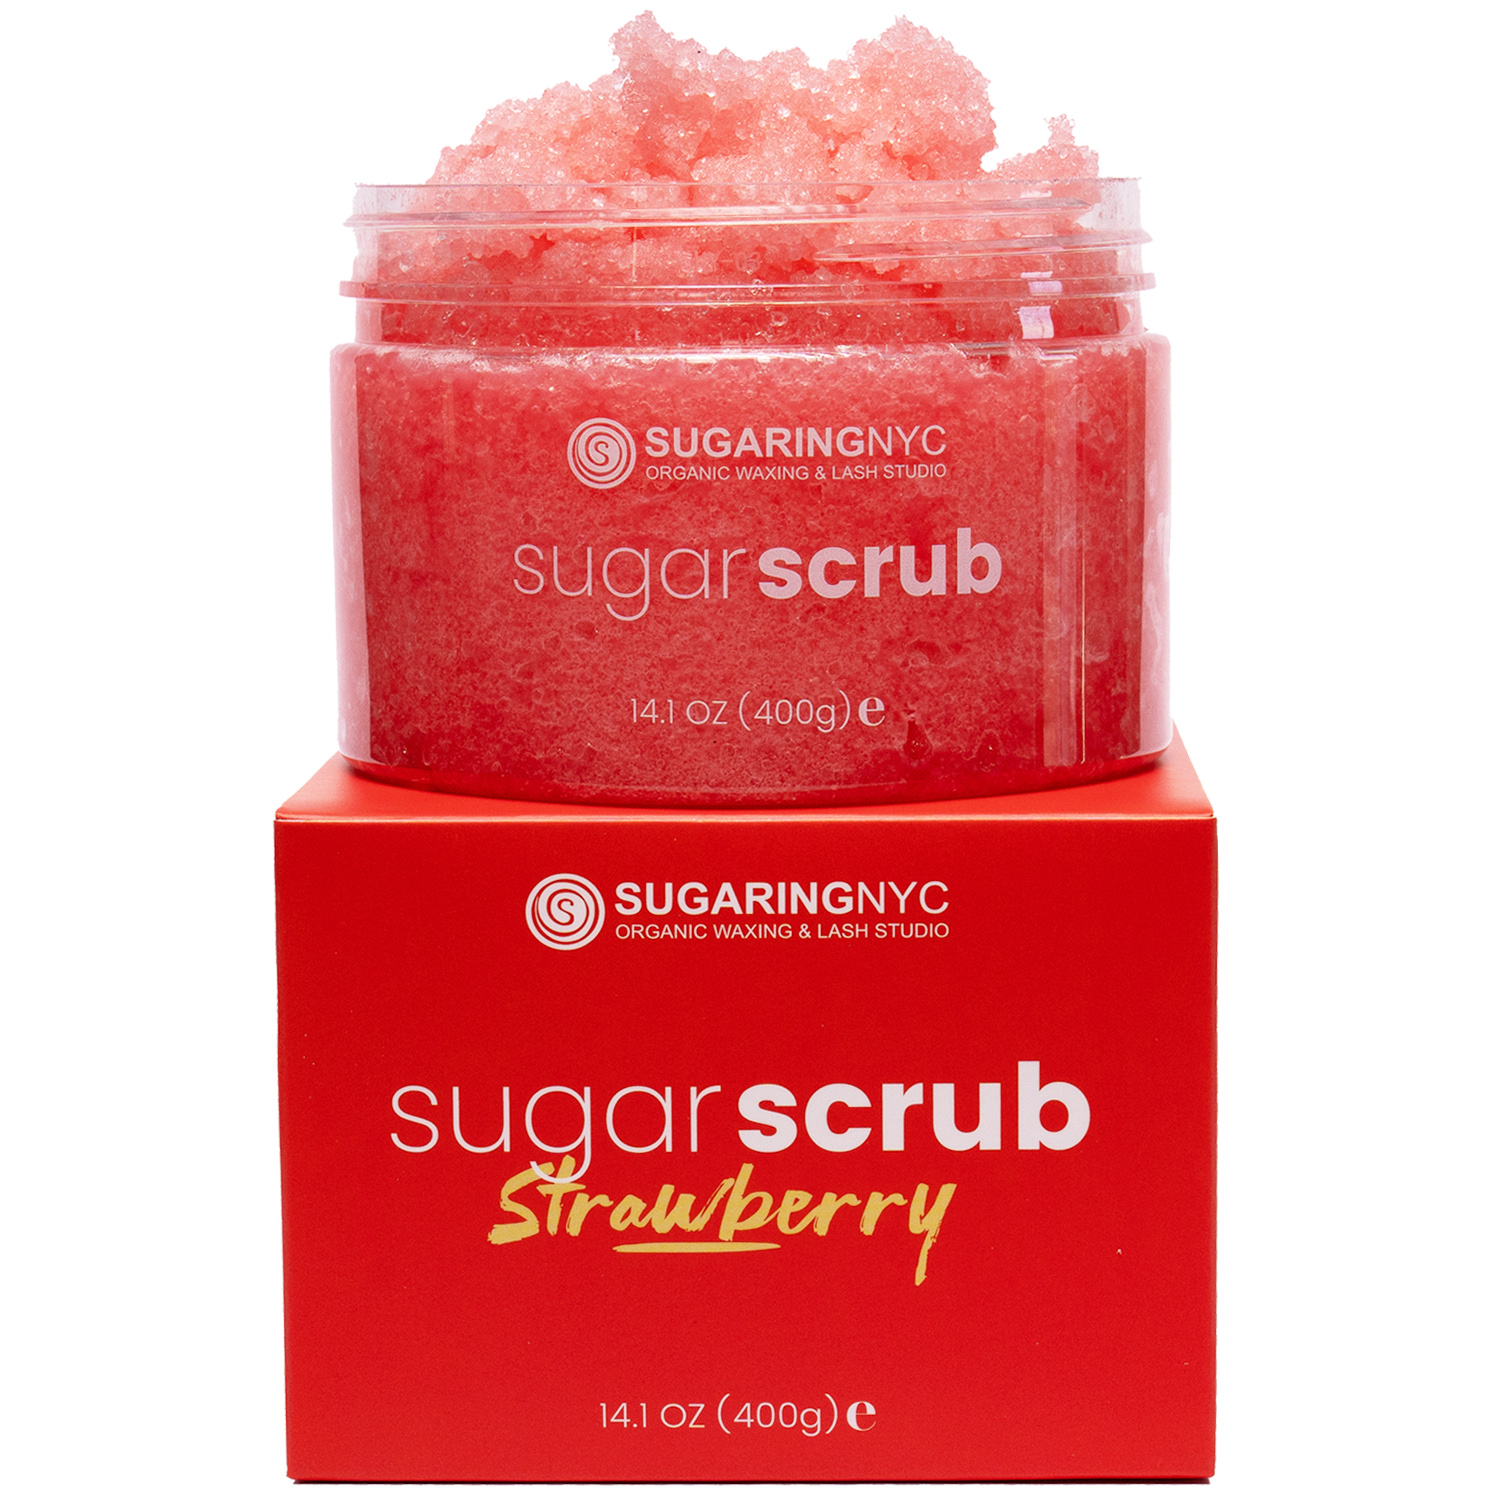 Sugaring NYC Signature Sugar Scrub – Strawberry Fields